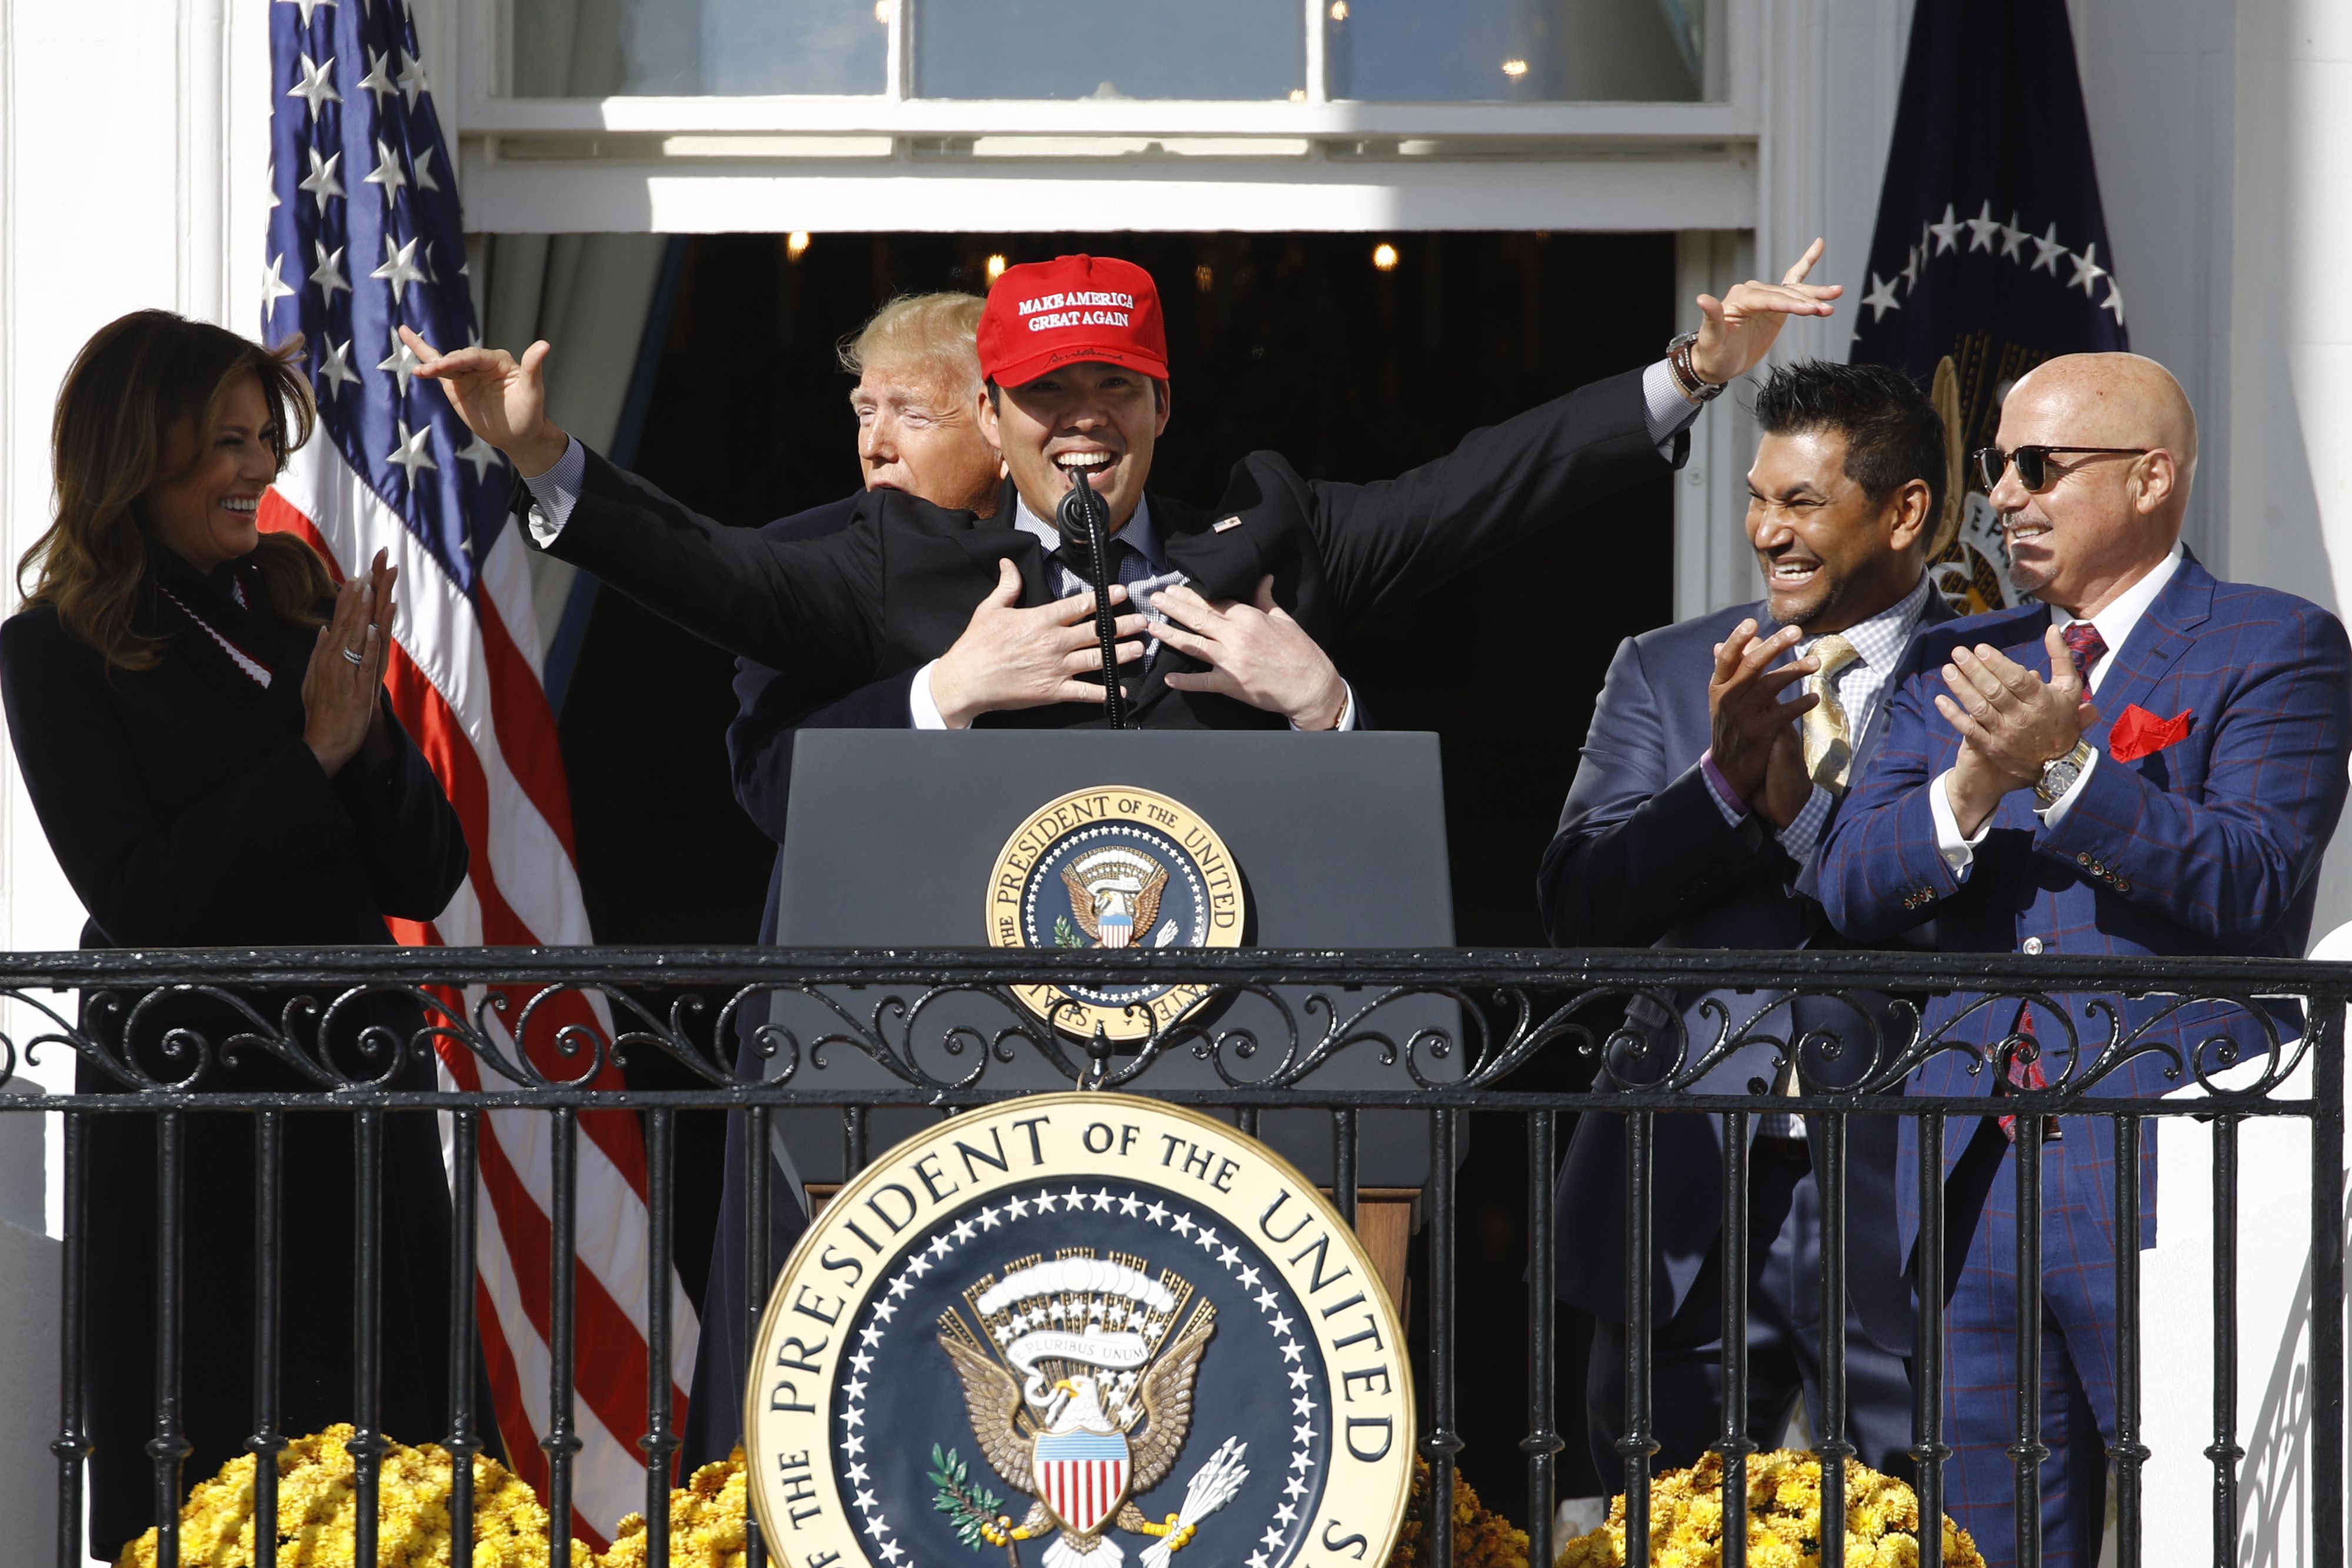 Hawaii's own Kurt Suzuki wore a Trump hat today at the White House, Washington Nationals